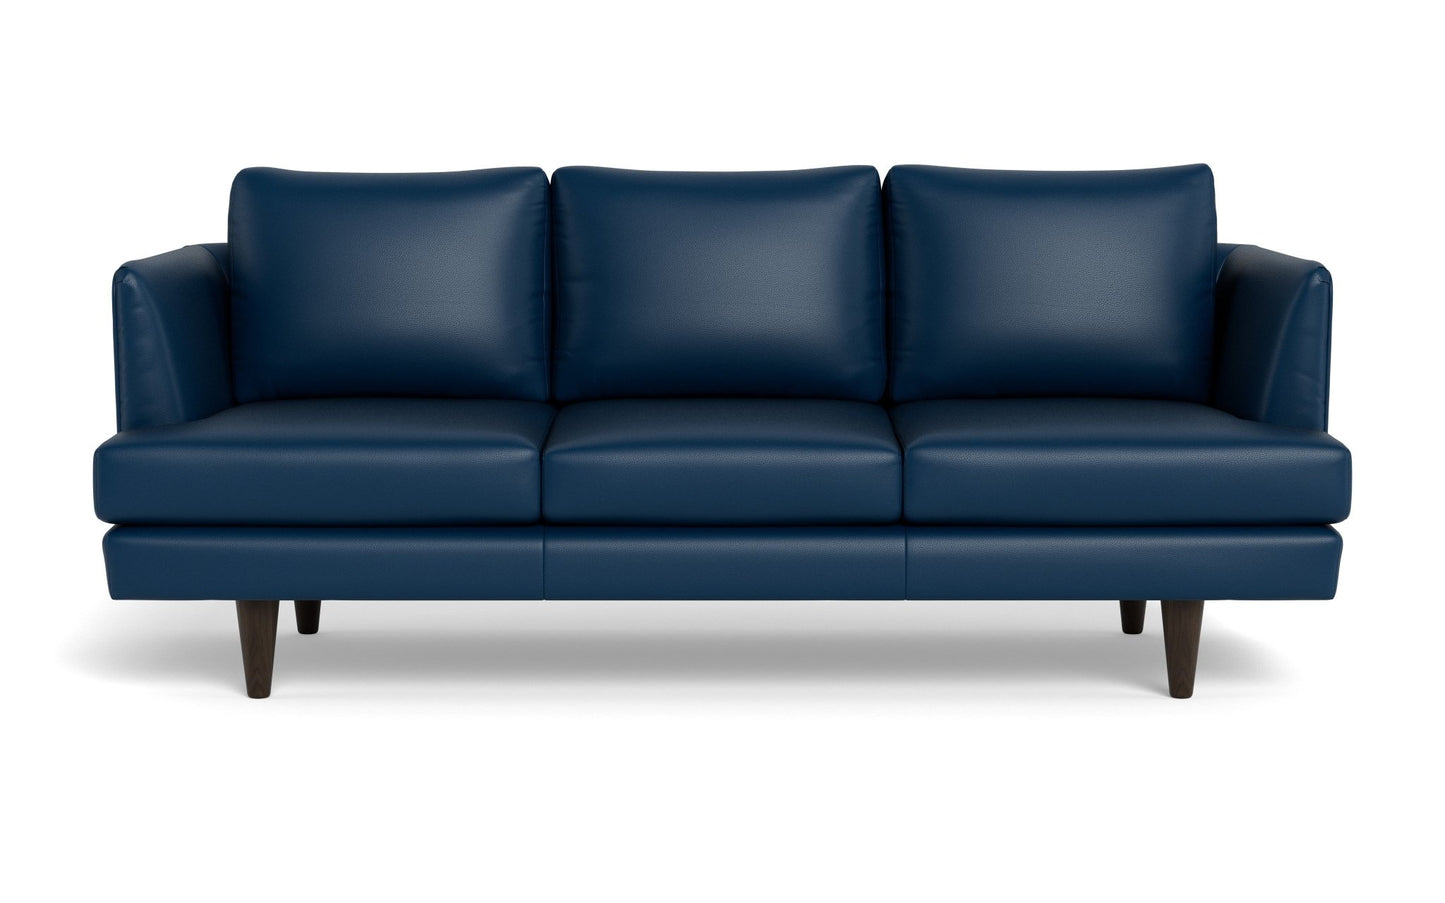 Rainey Leather Sofa